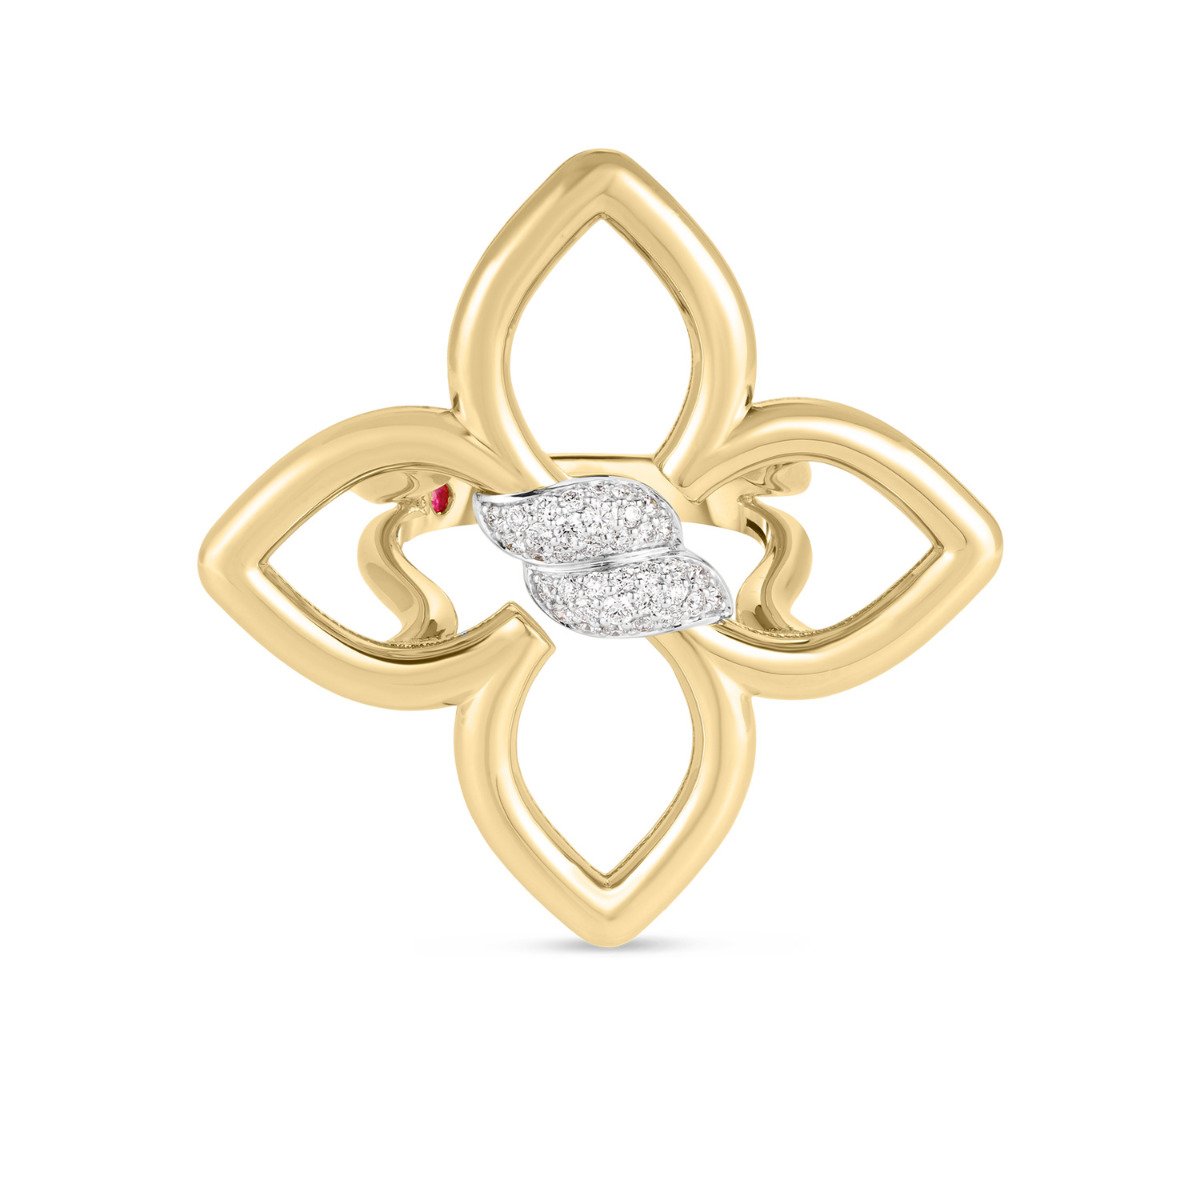 Roberto Coin "Cialoma" 18kt Gold Diamond Flower Ring